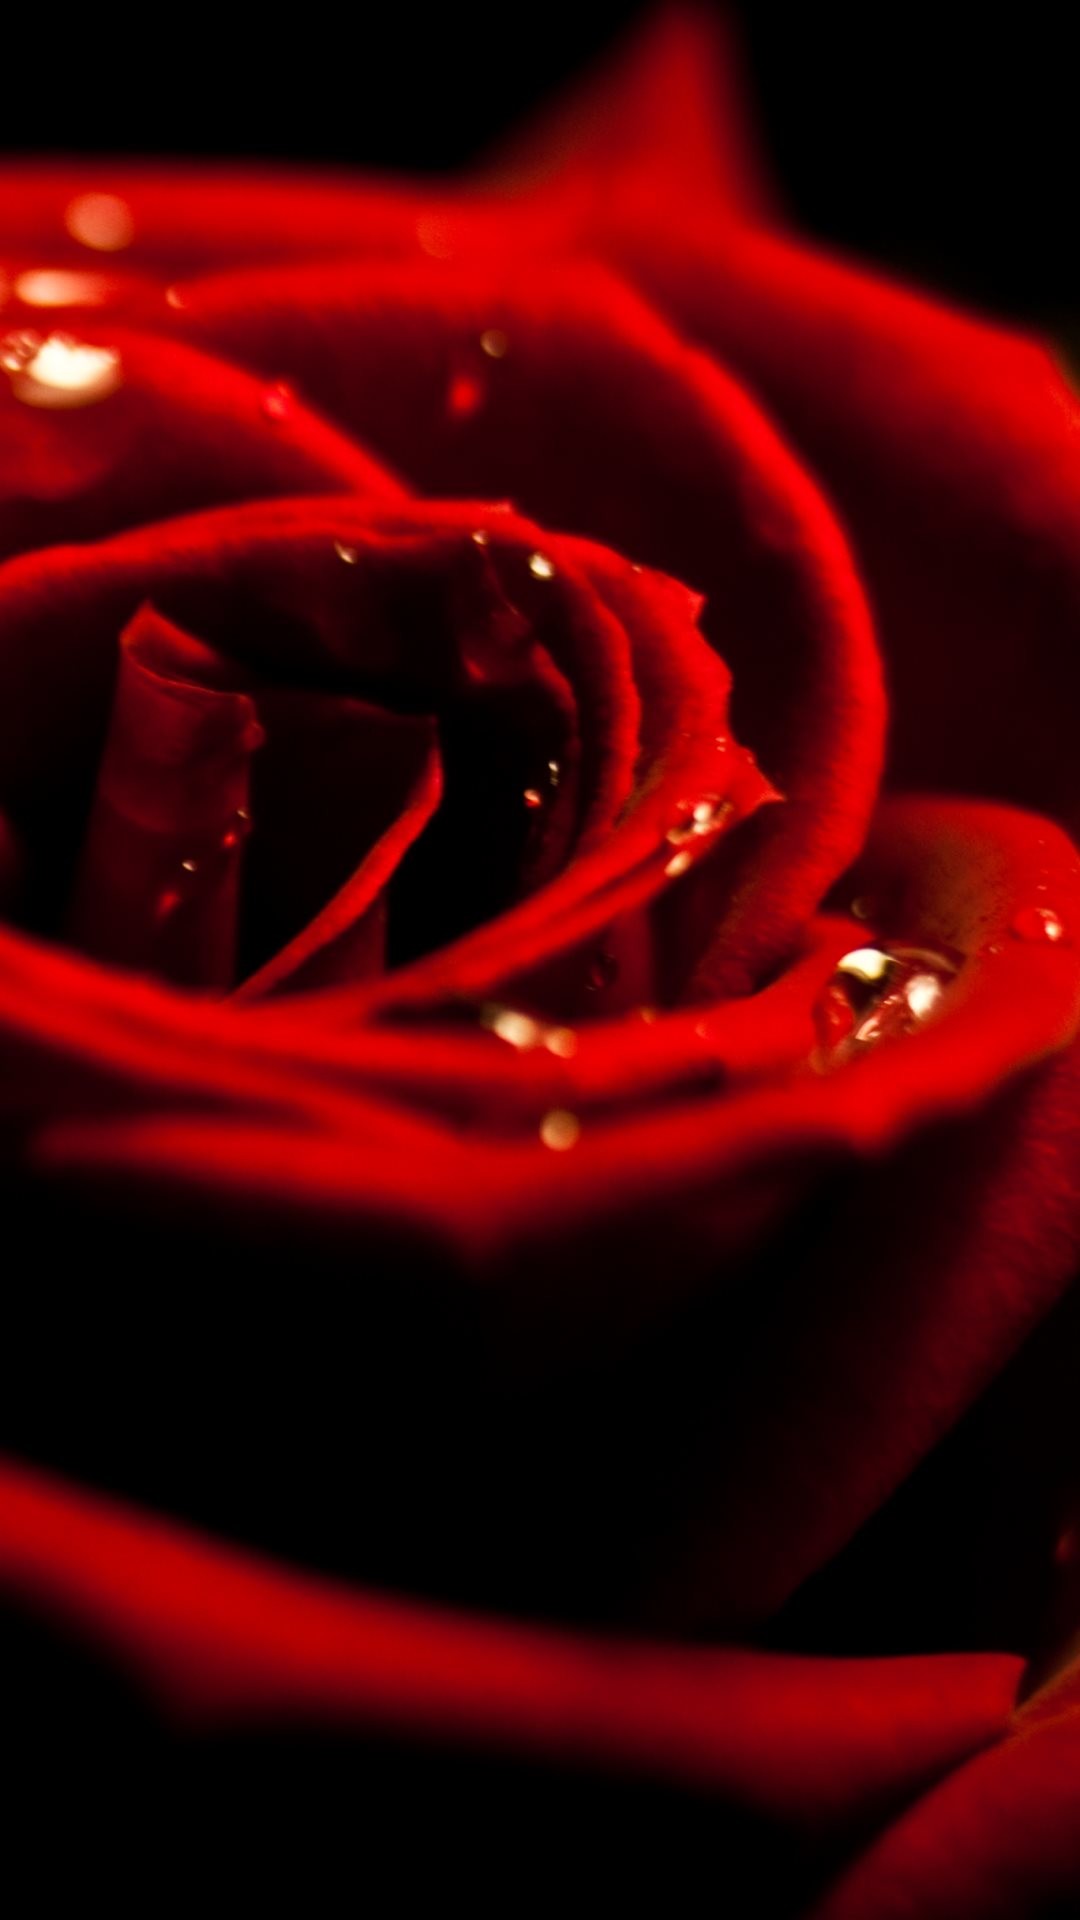 1080x1920 Red Rose Dew Closeup iPhone 6 Plus HD Wallpaper ...